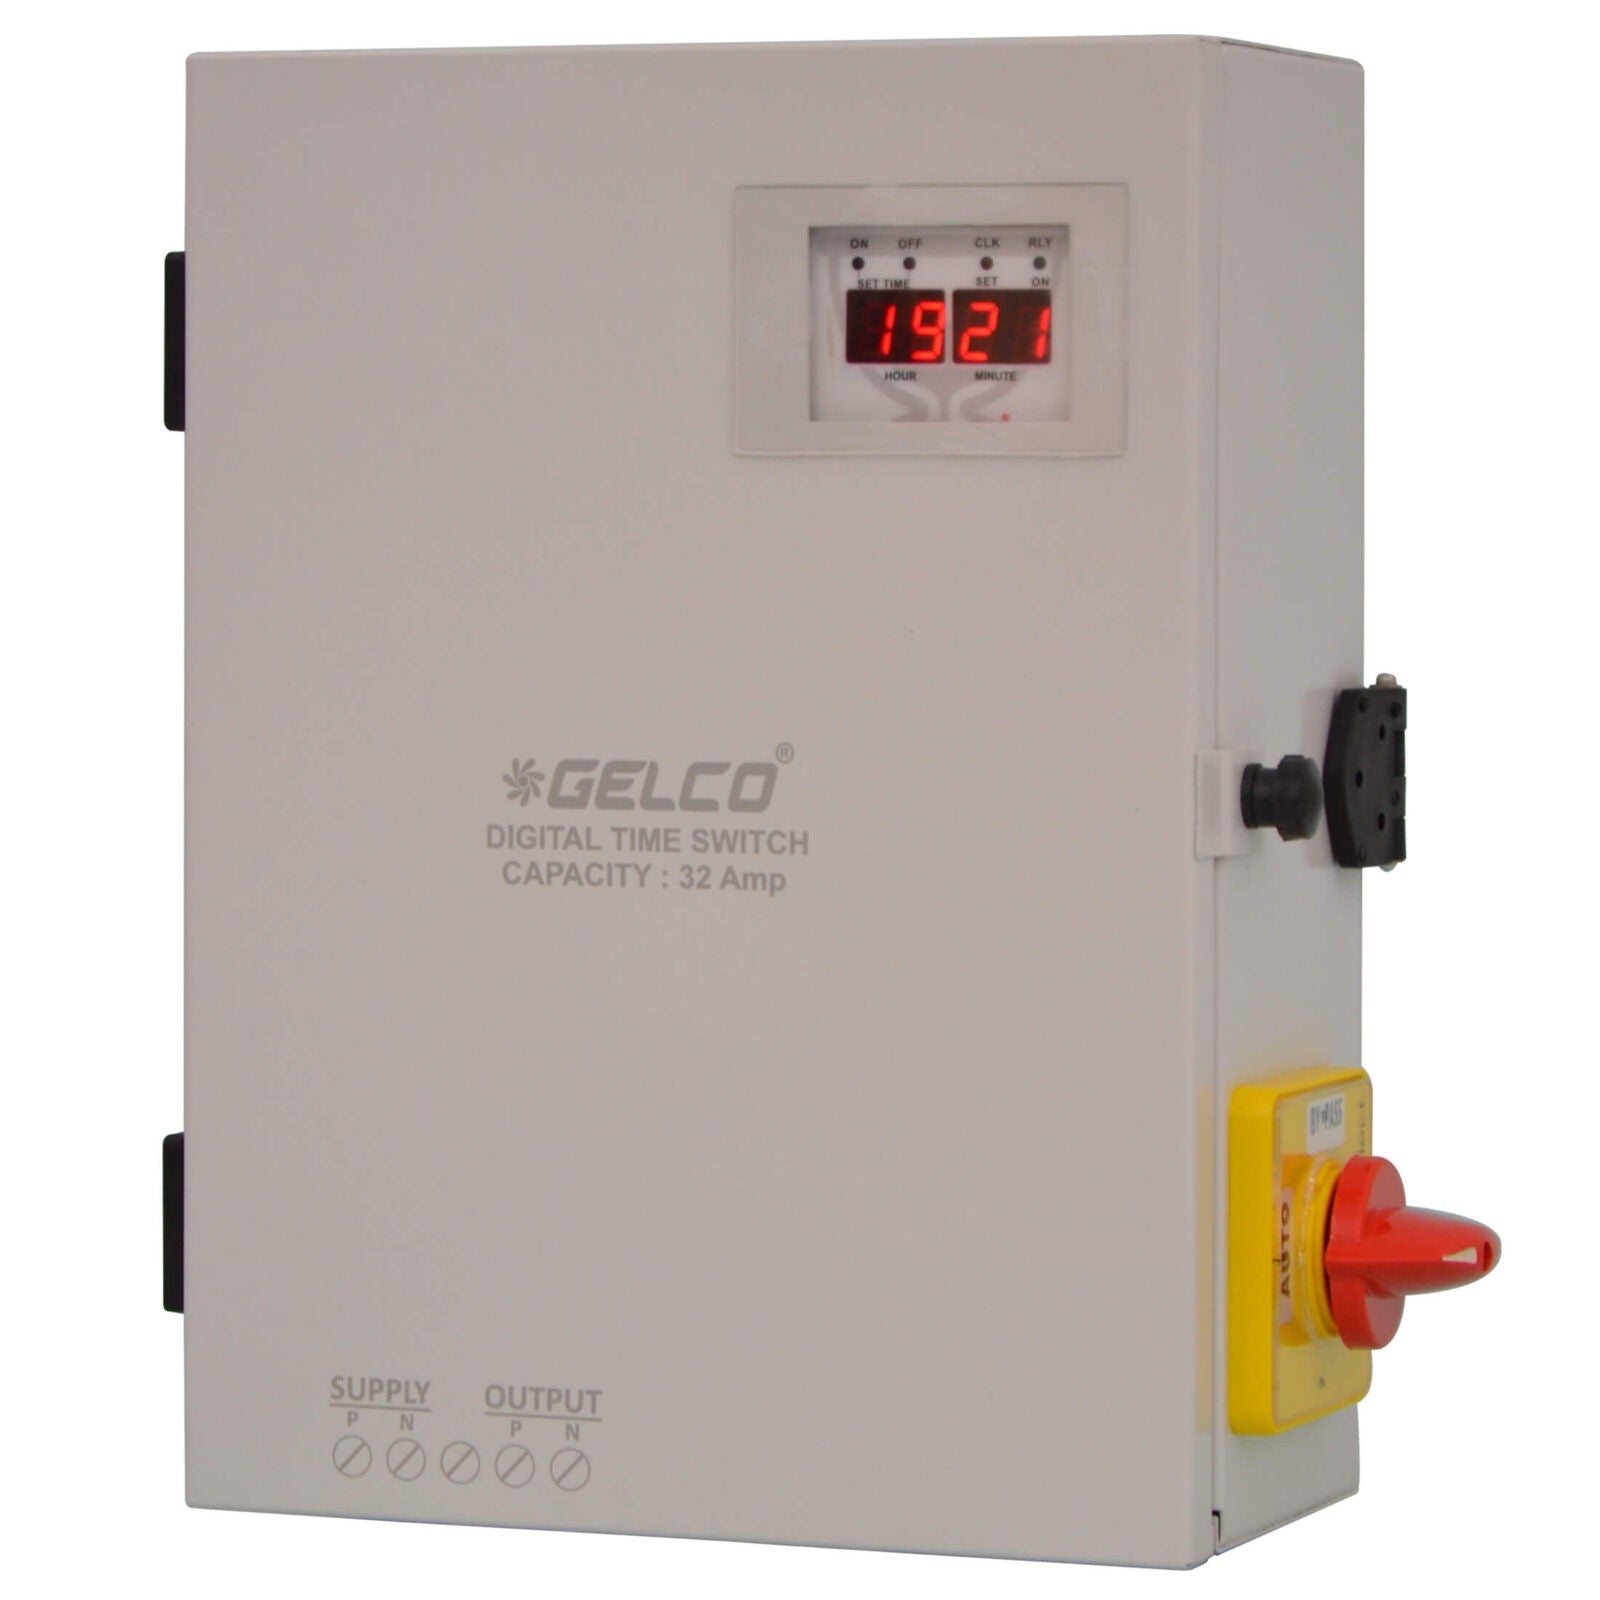 Digital Time Switch Panel - Gelco Electronics Pvt. Ltd.